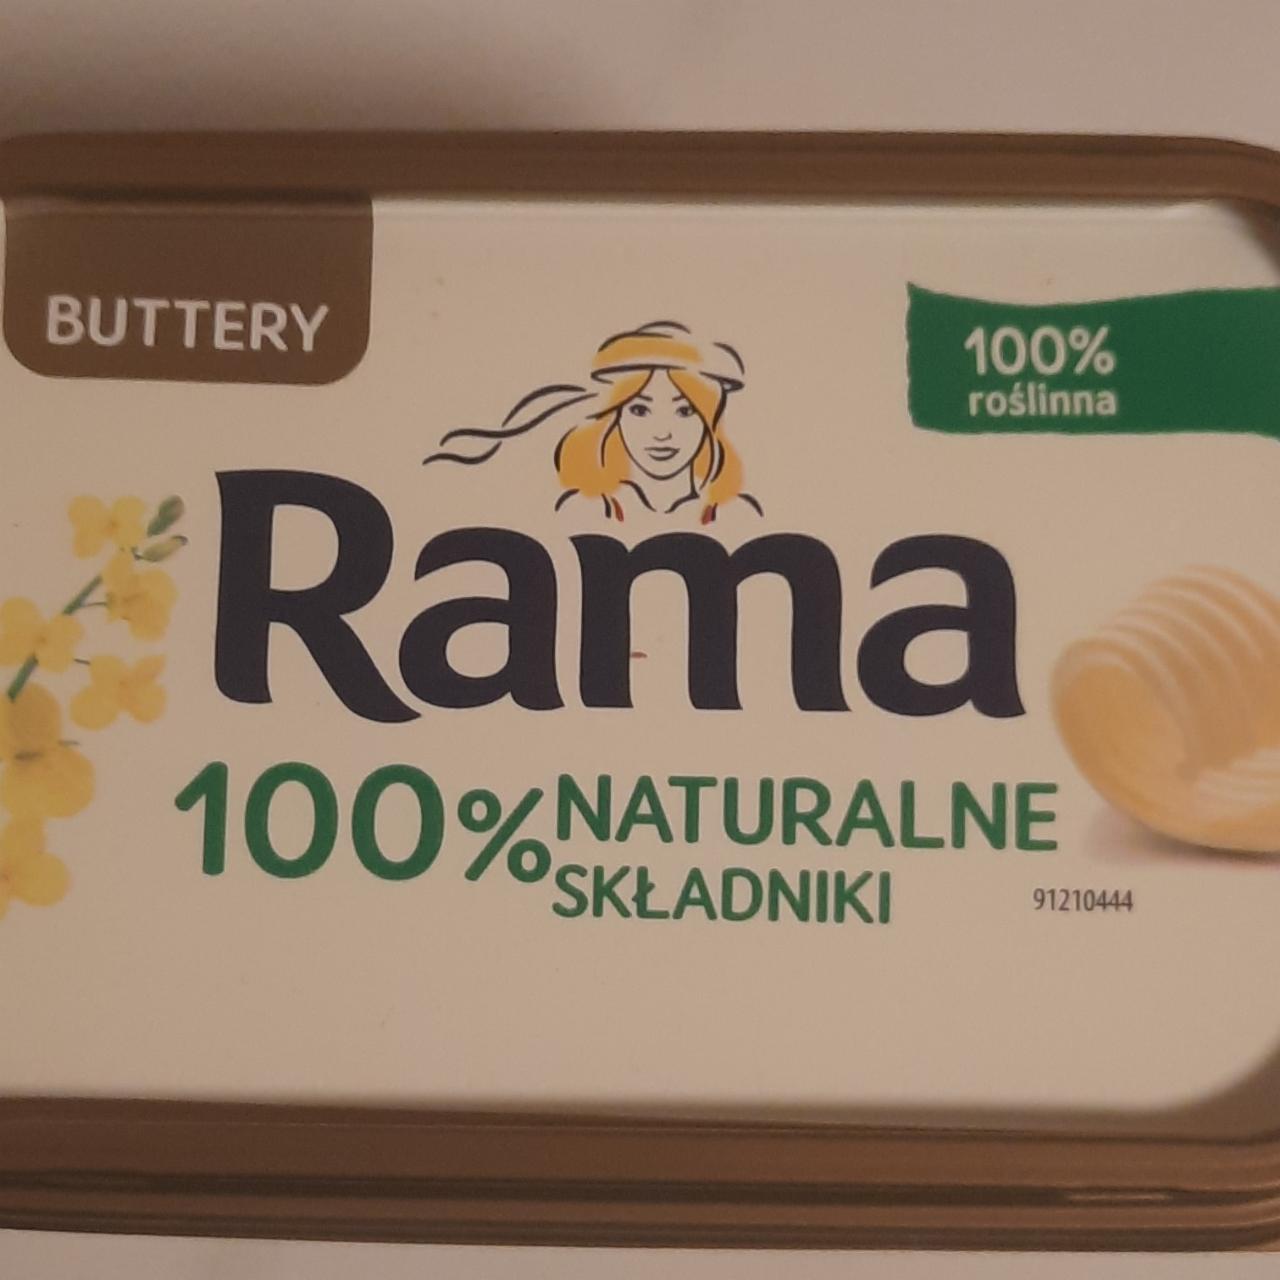 Фото - Buttery 100% naturalne składniki Rama